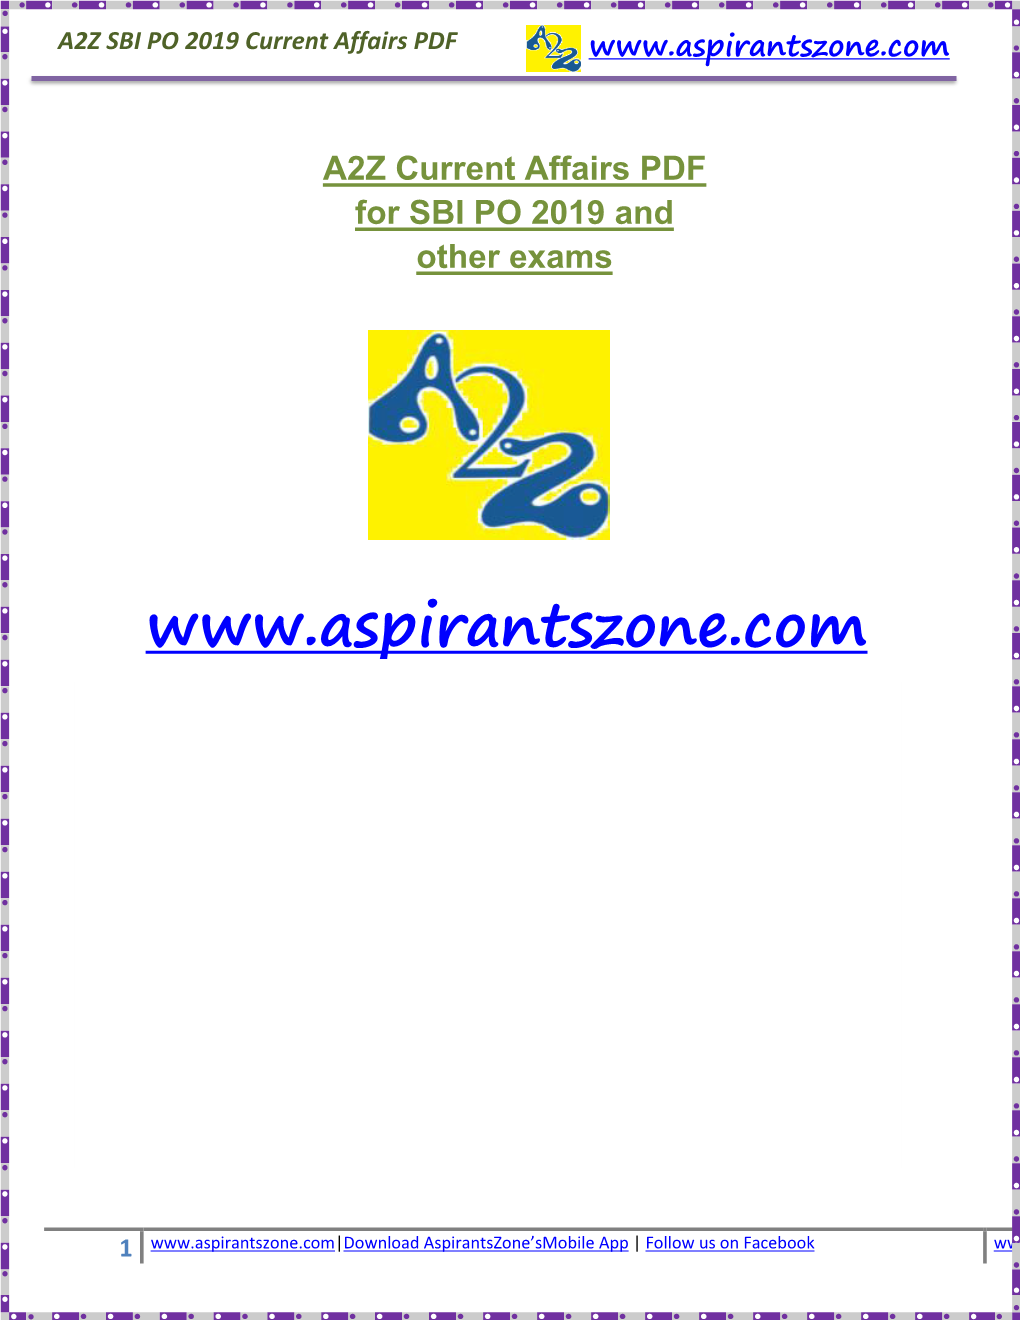 A2Z SBI PO 2019 Current Affairs PDF